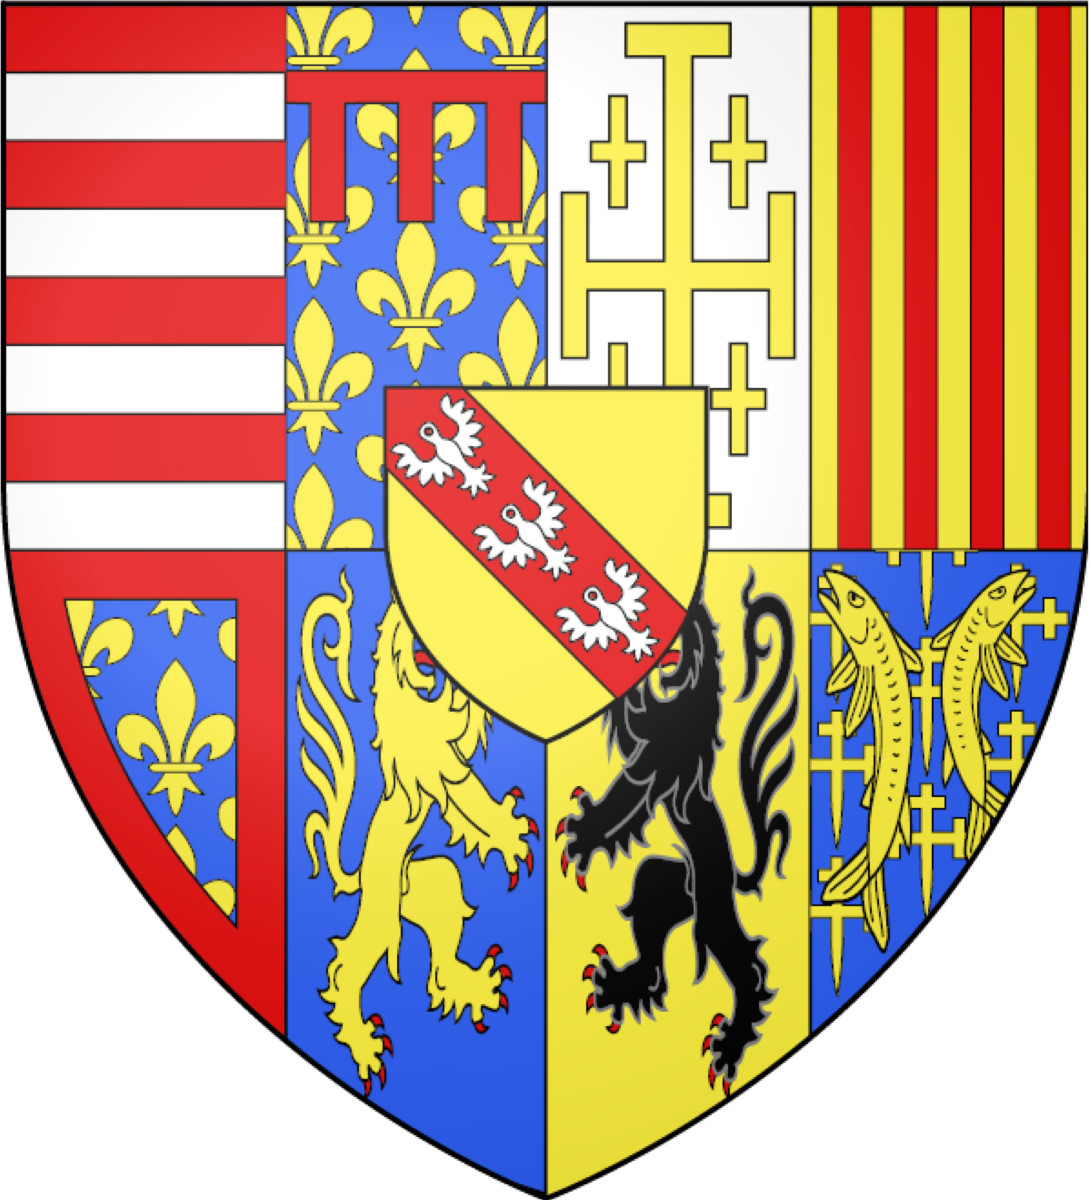 Blason des ducs de Lorraine 1538 © Ipankonin - licence [CC BY-SA 3.0] from Wikimedia Commons